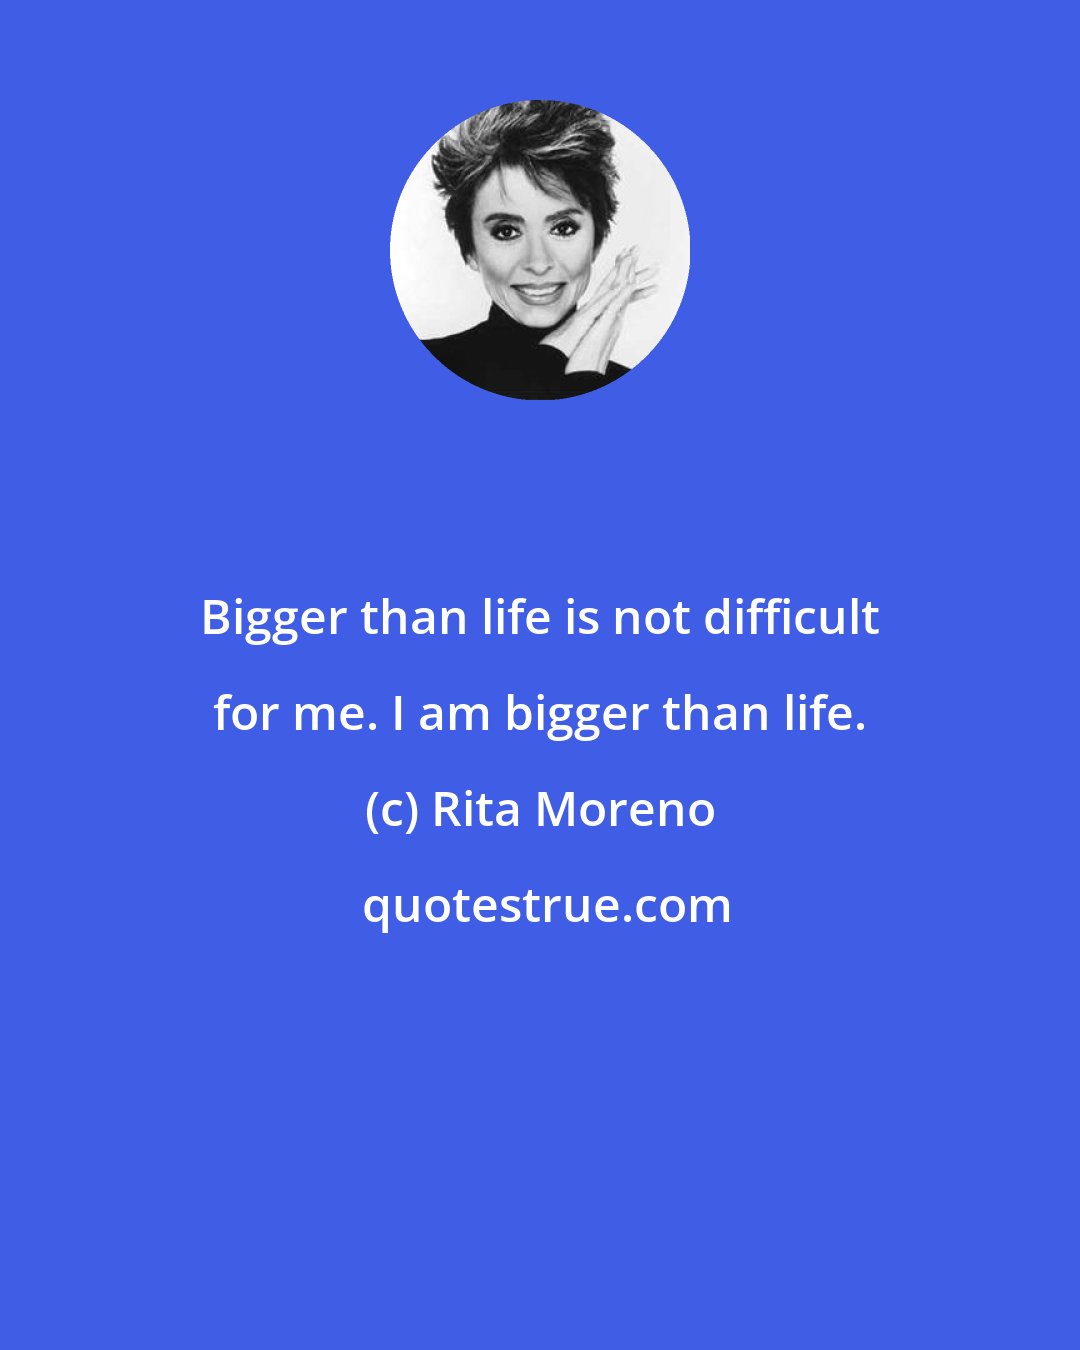 Rita Moreno: Bigger than life is not difficult for me. I am bigger than life.